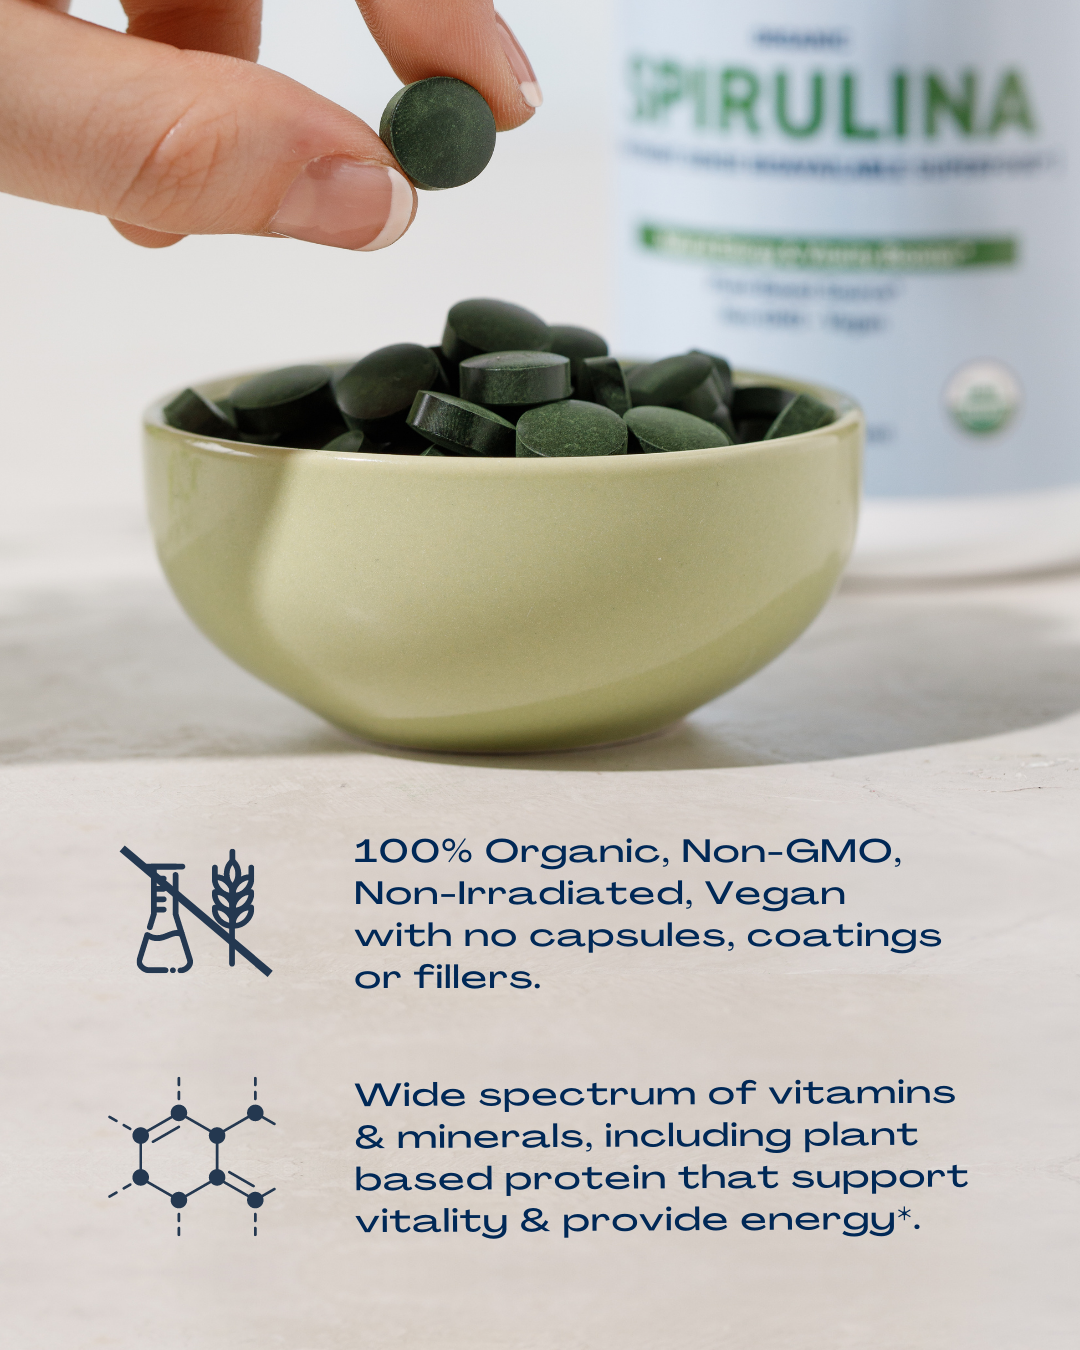 BioOptimal Spirulina Tablets - Organic - No Filler & Non-GMO, Rich in Vegan Protein, Vitamins & Prebiotics